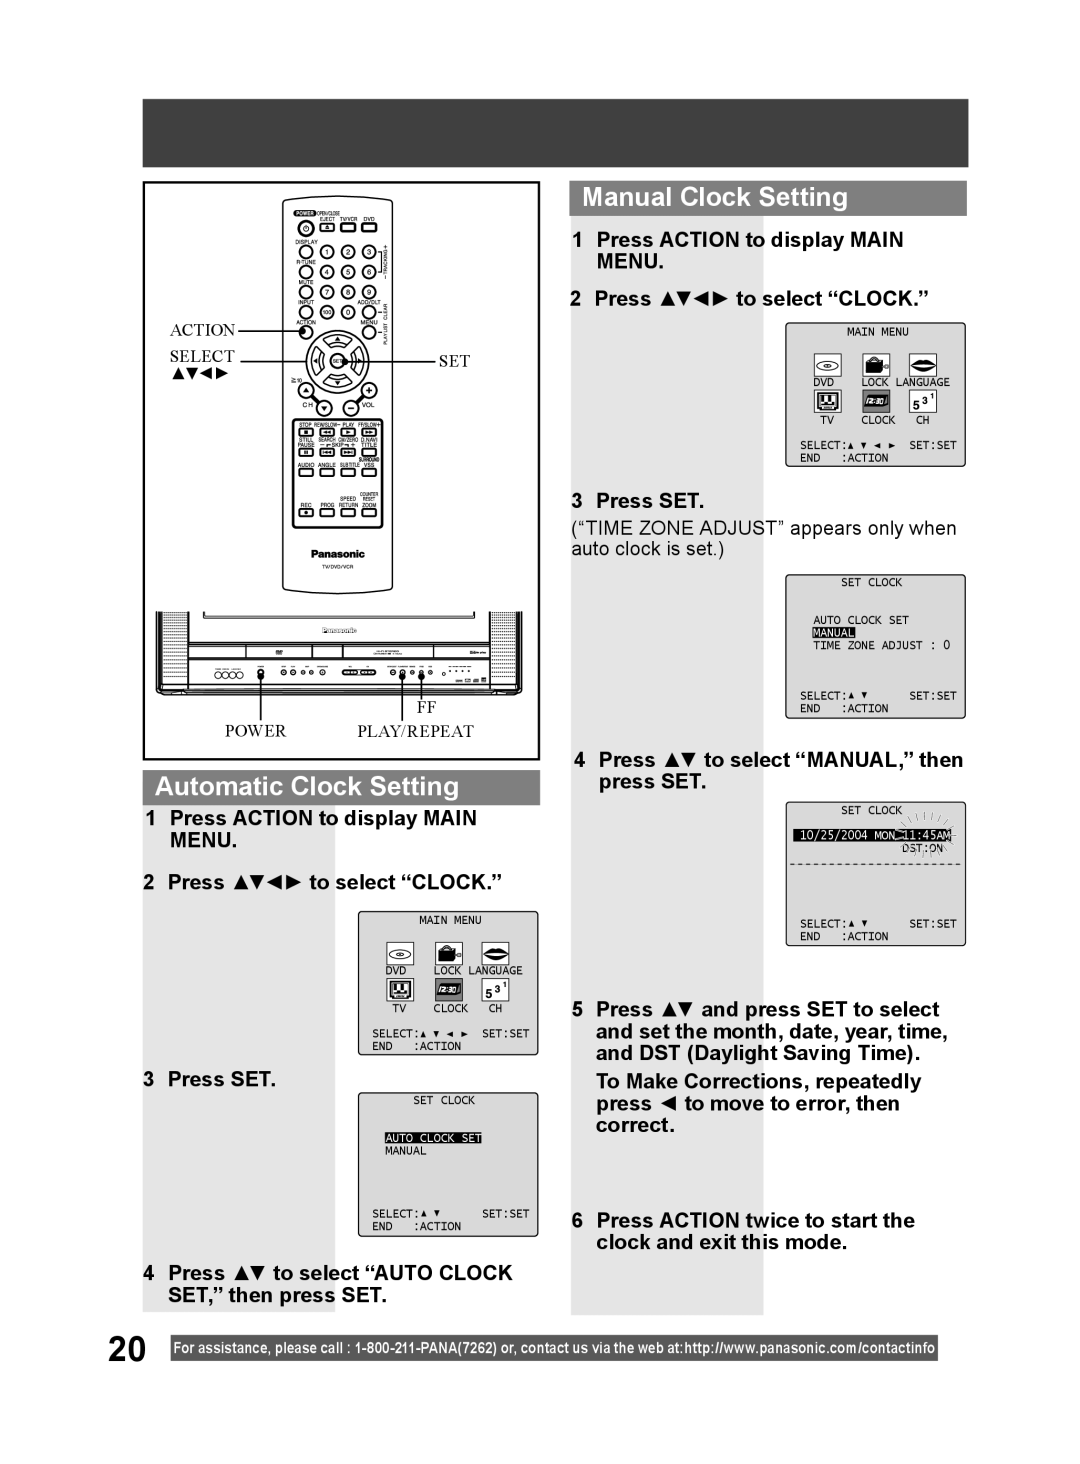 Panasonic PV DF2004 Automatic Clock Setting, Manual Clock Setting, Press SET, Press to select “MANUAL,” then press SET 